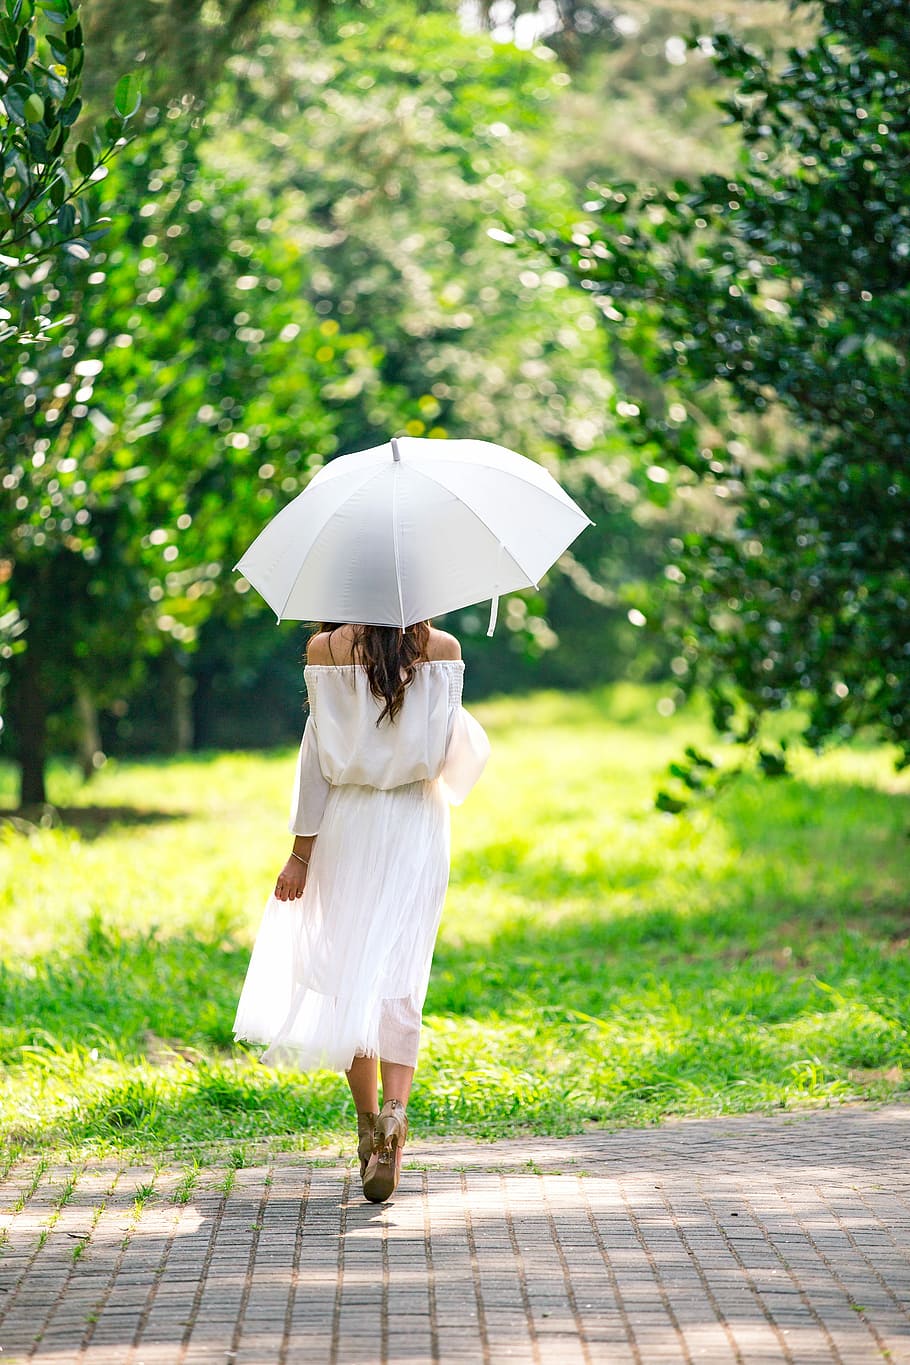 woman, walking, brick pavement, umbrella, day, nature, summer, outdoors, people, grass